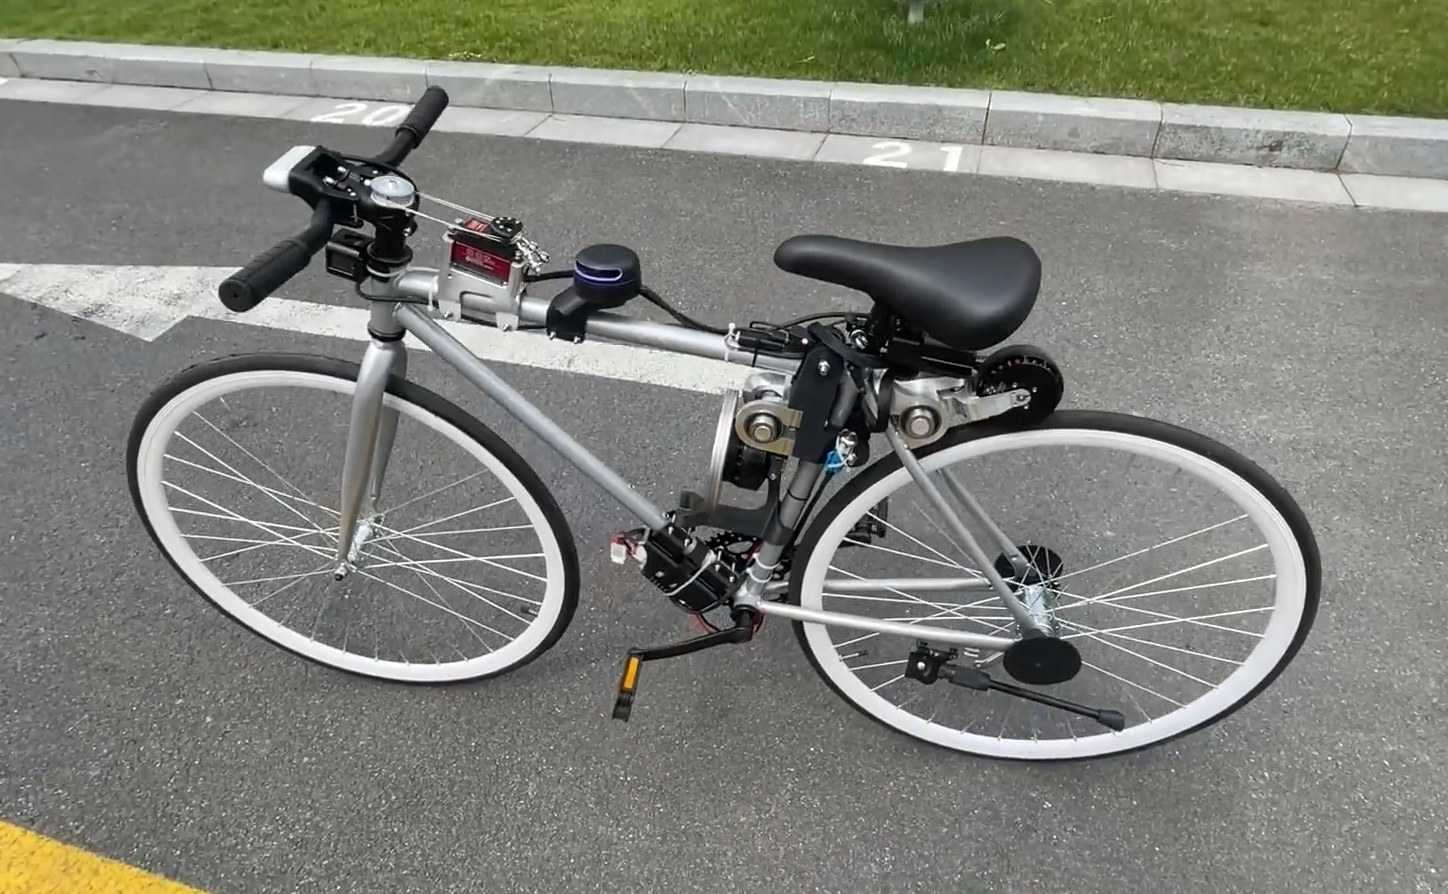 XUAN-bike self-balancing self-riding bicycle